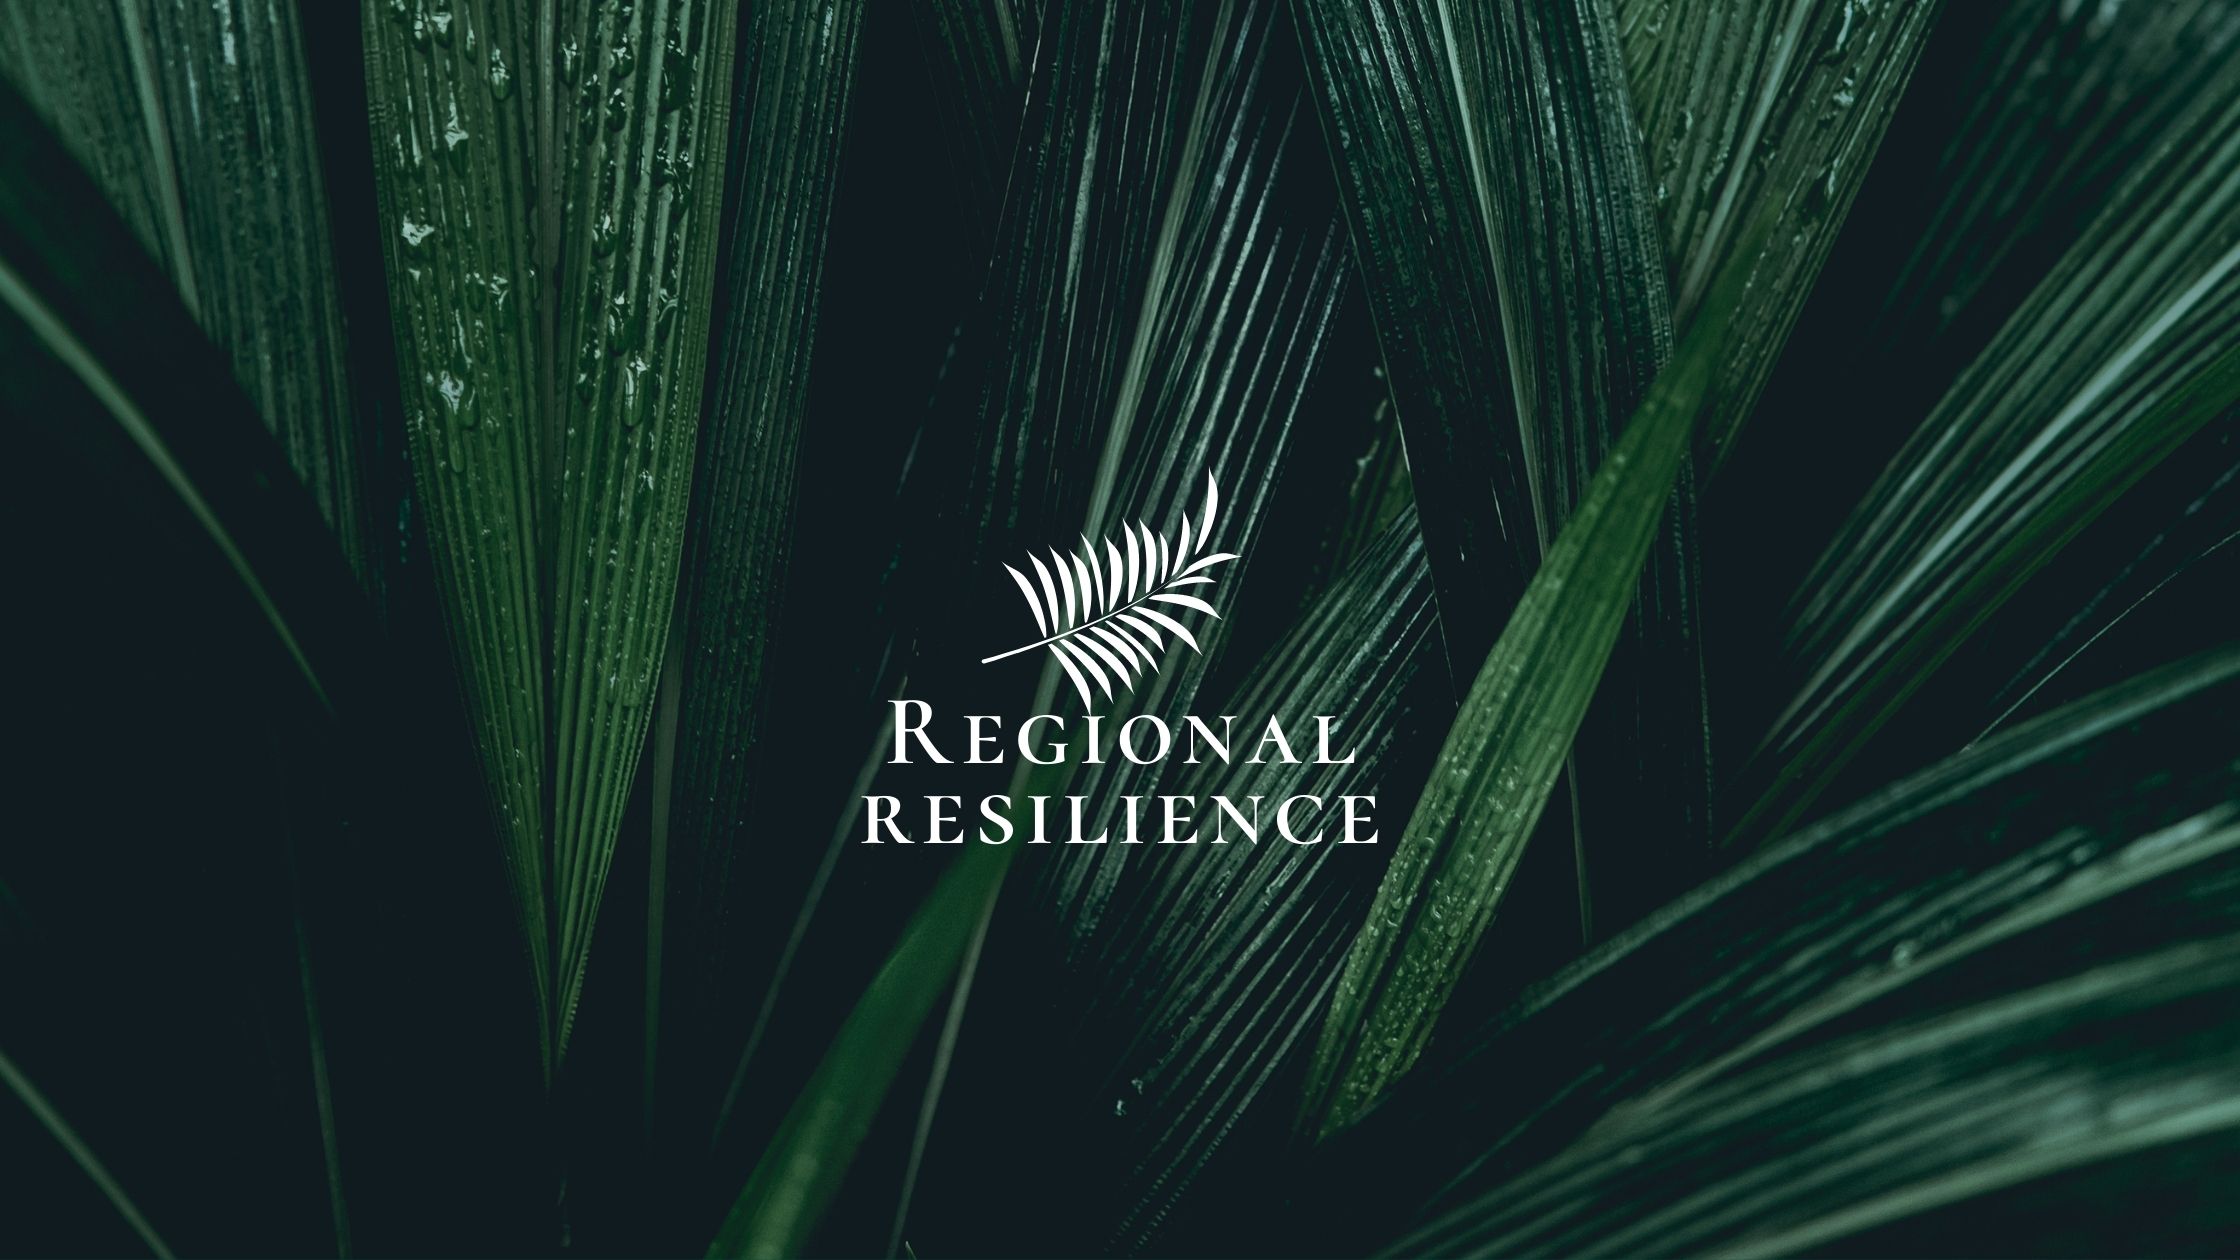 Regional resilience